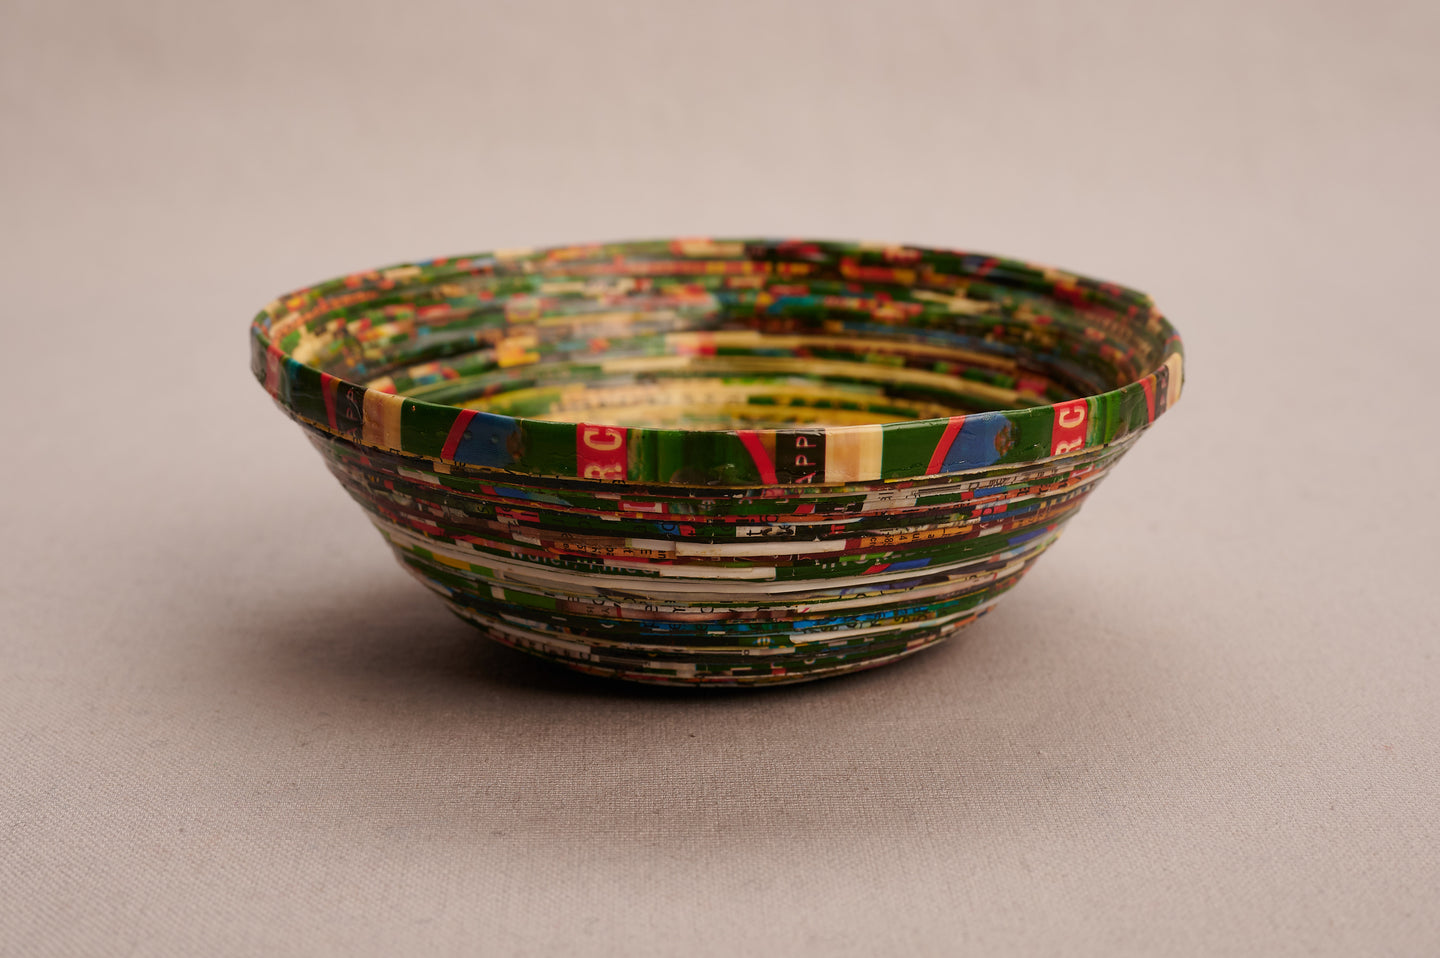 Medium-sized decorative bowl made of 